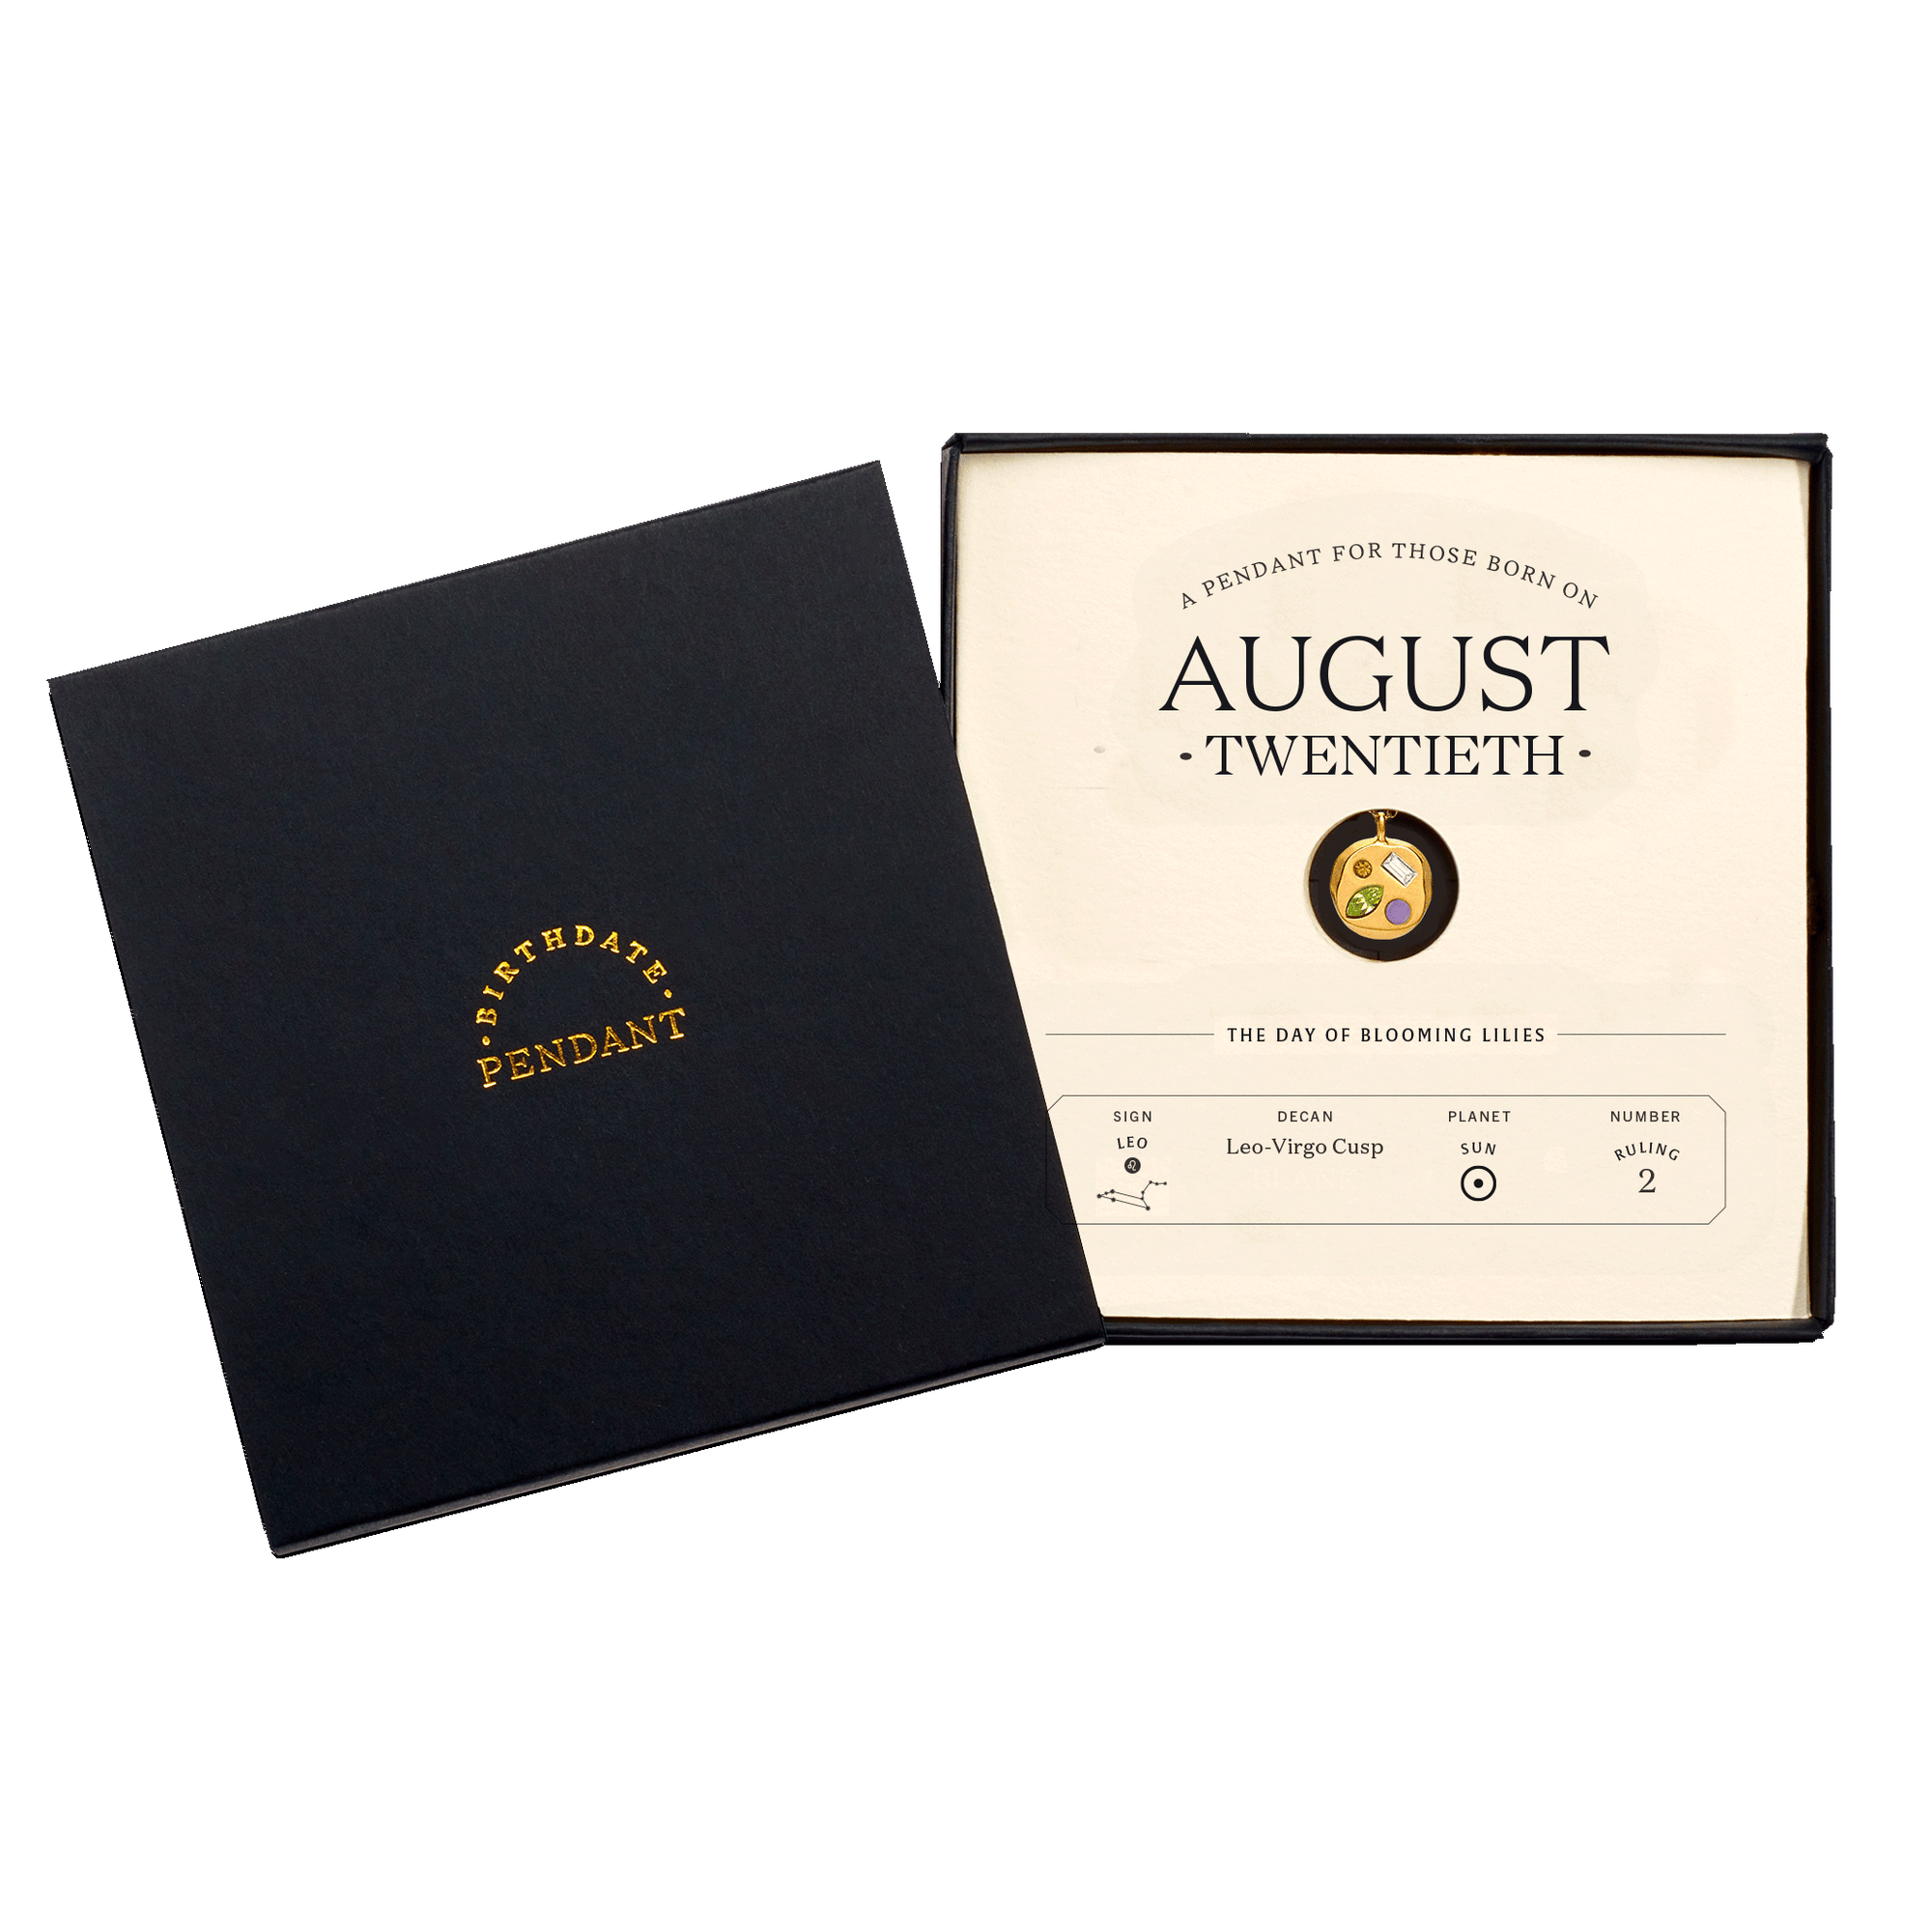 The August Twentieth Pendant inside its box